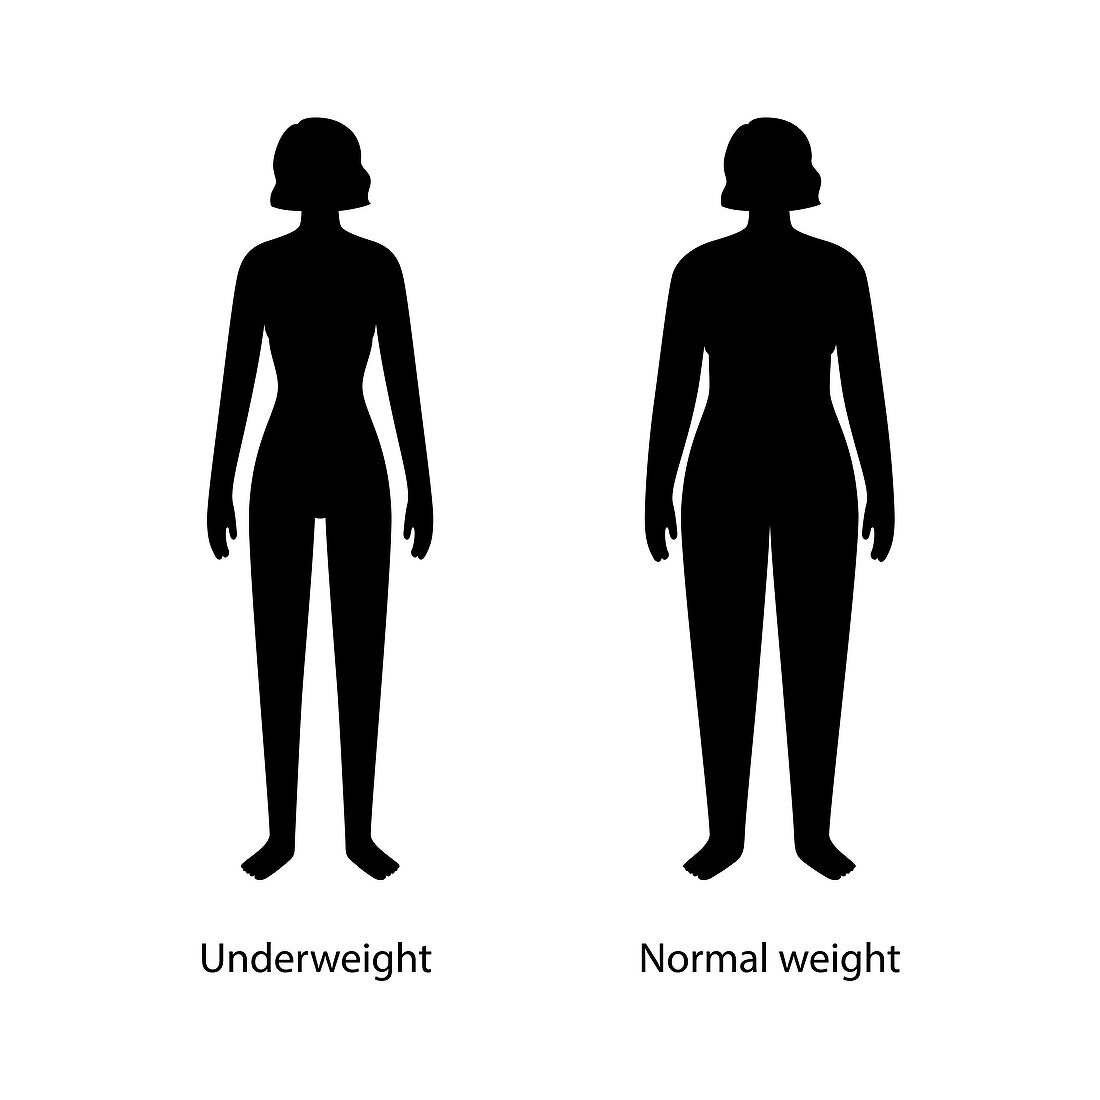 Underweight woman, illustration